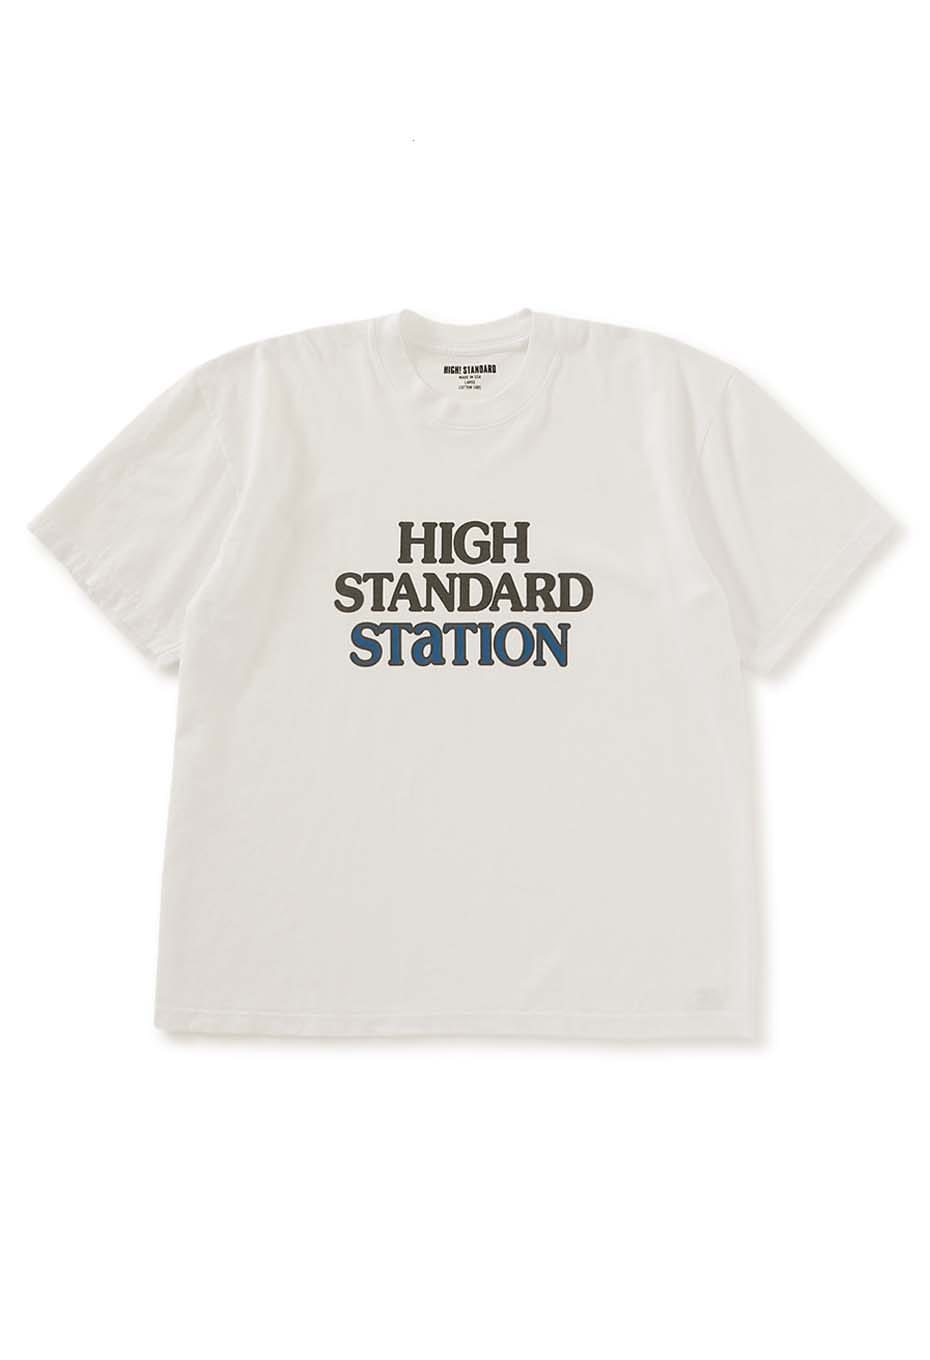 HIGH STANDARD STATION ショートスリーブ Tシャツ MADE IN USA